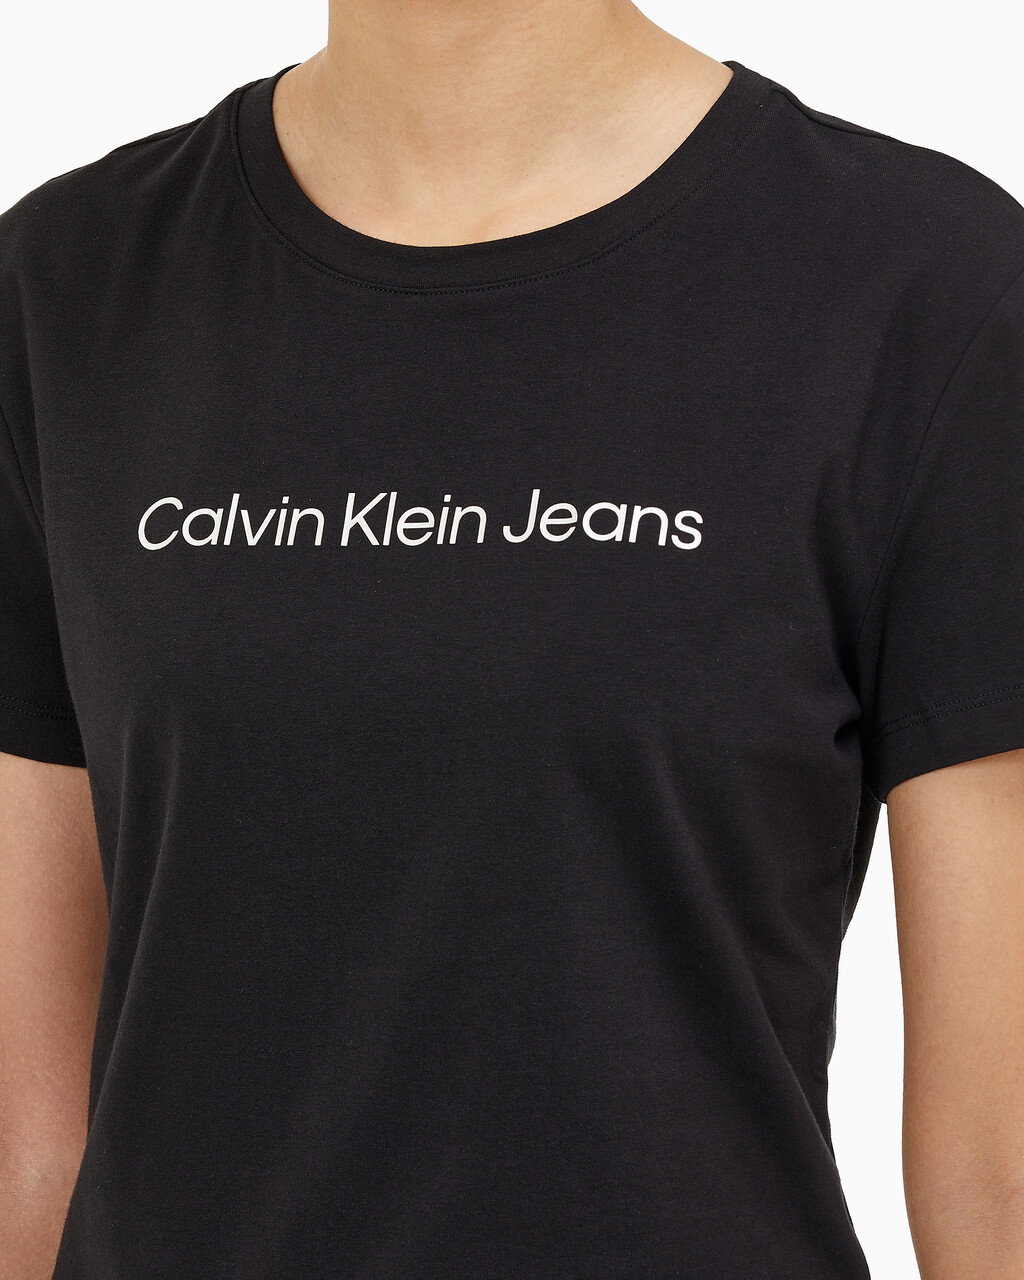 Buy 여성 슬림핏 인스티튜셔널 로고 반팔 티셔츠 in color CK BLACK